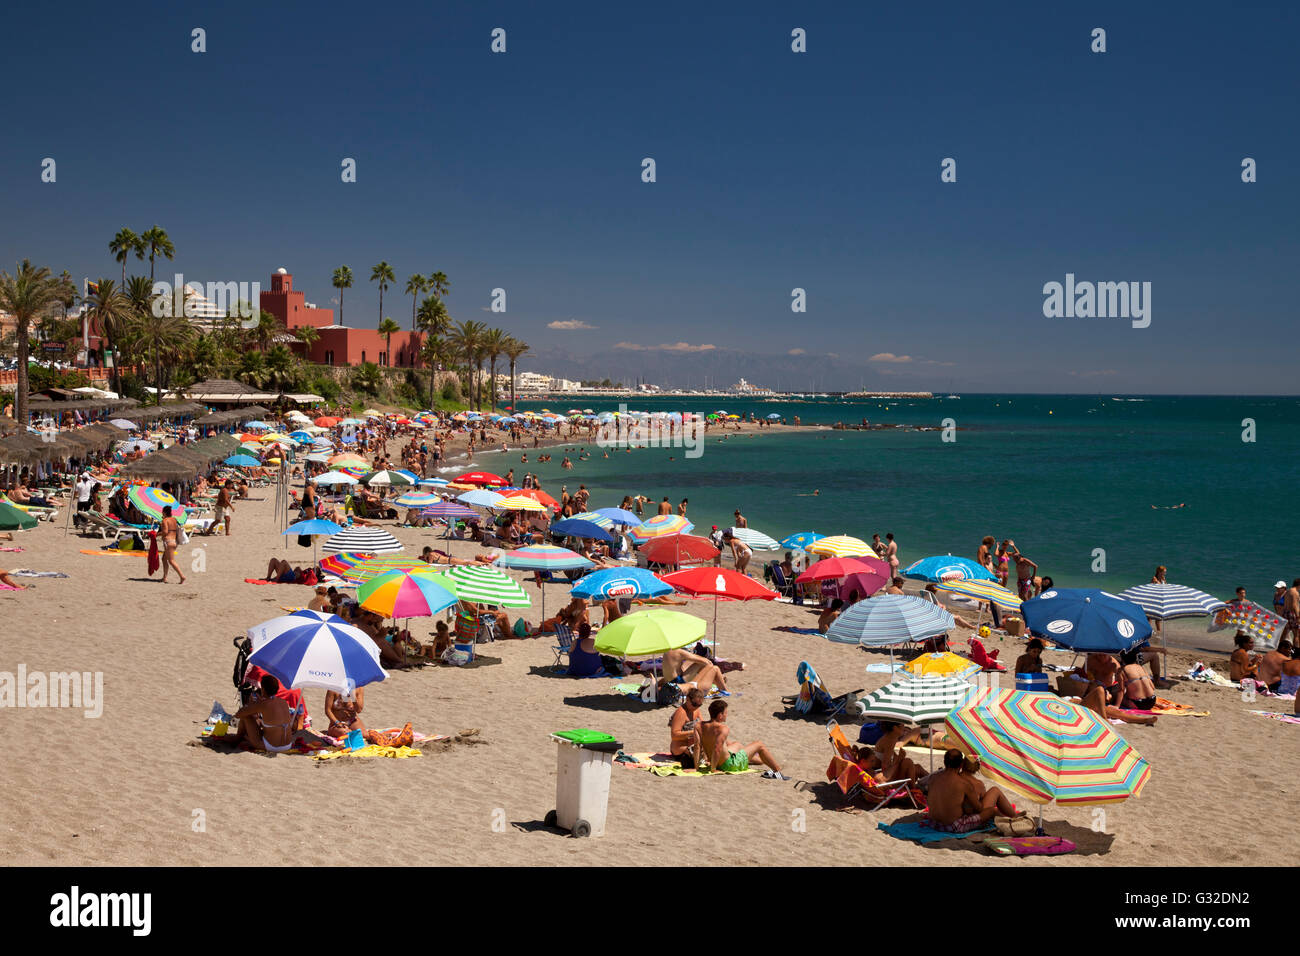 L'animation de Playa de la plage de Santa Ana et El Castillo château Bil-Bil, Benalmadena, province de Malaga, Costa del Sol, Andalousie, Espagne Banque D'Images